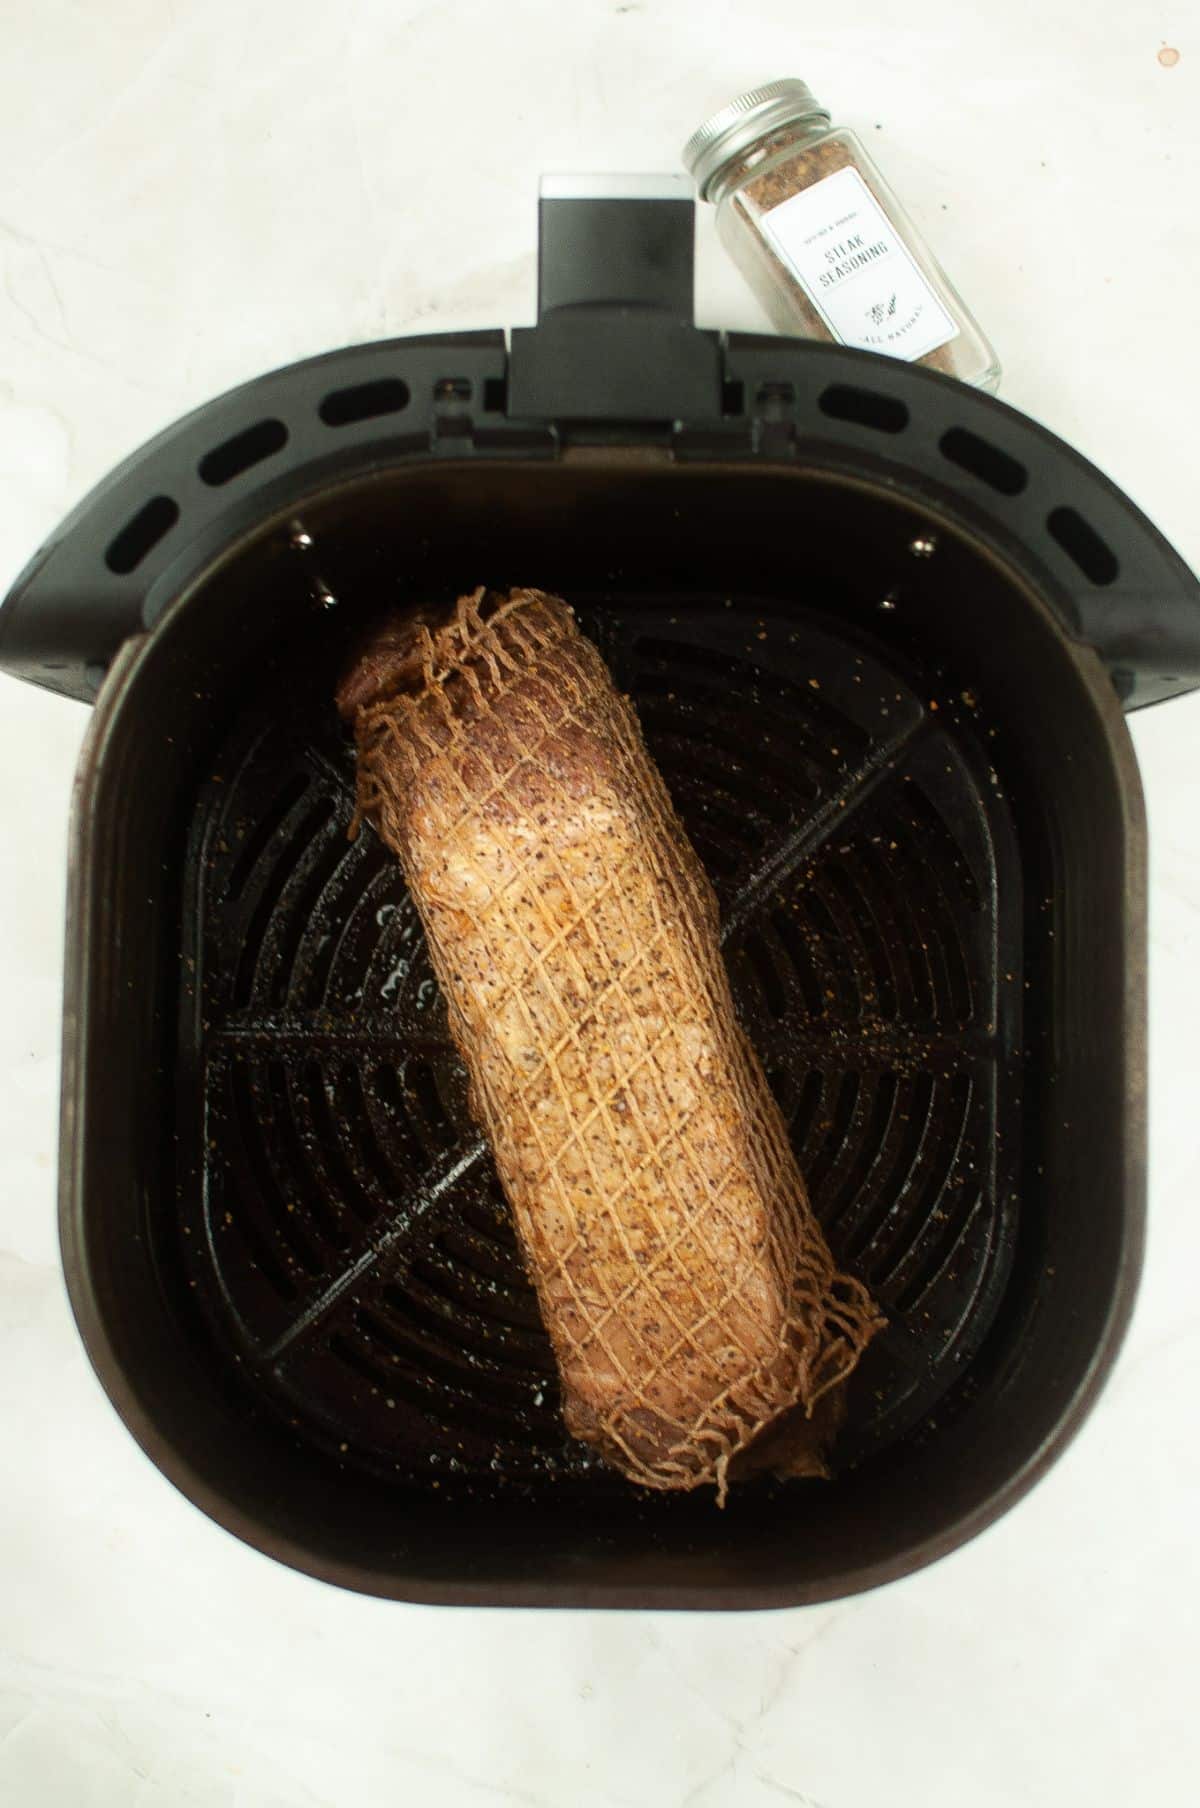 beef loin inside the Air Fryer basket.